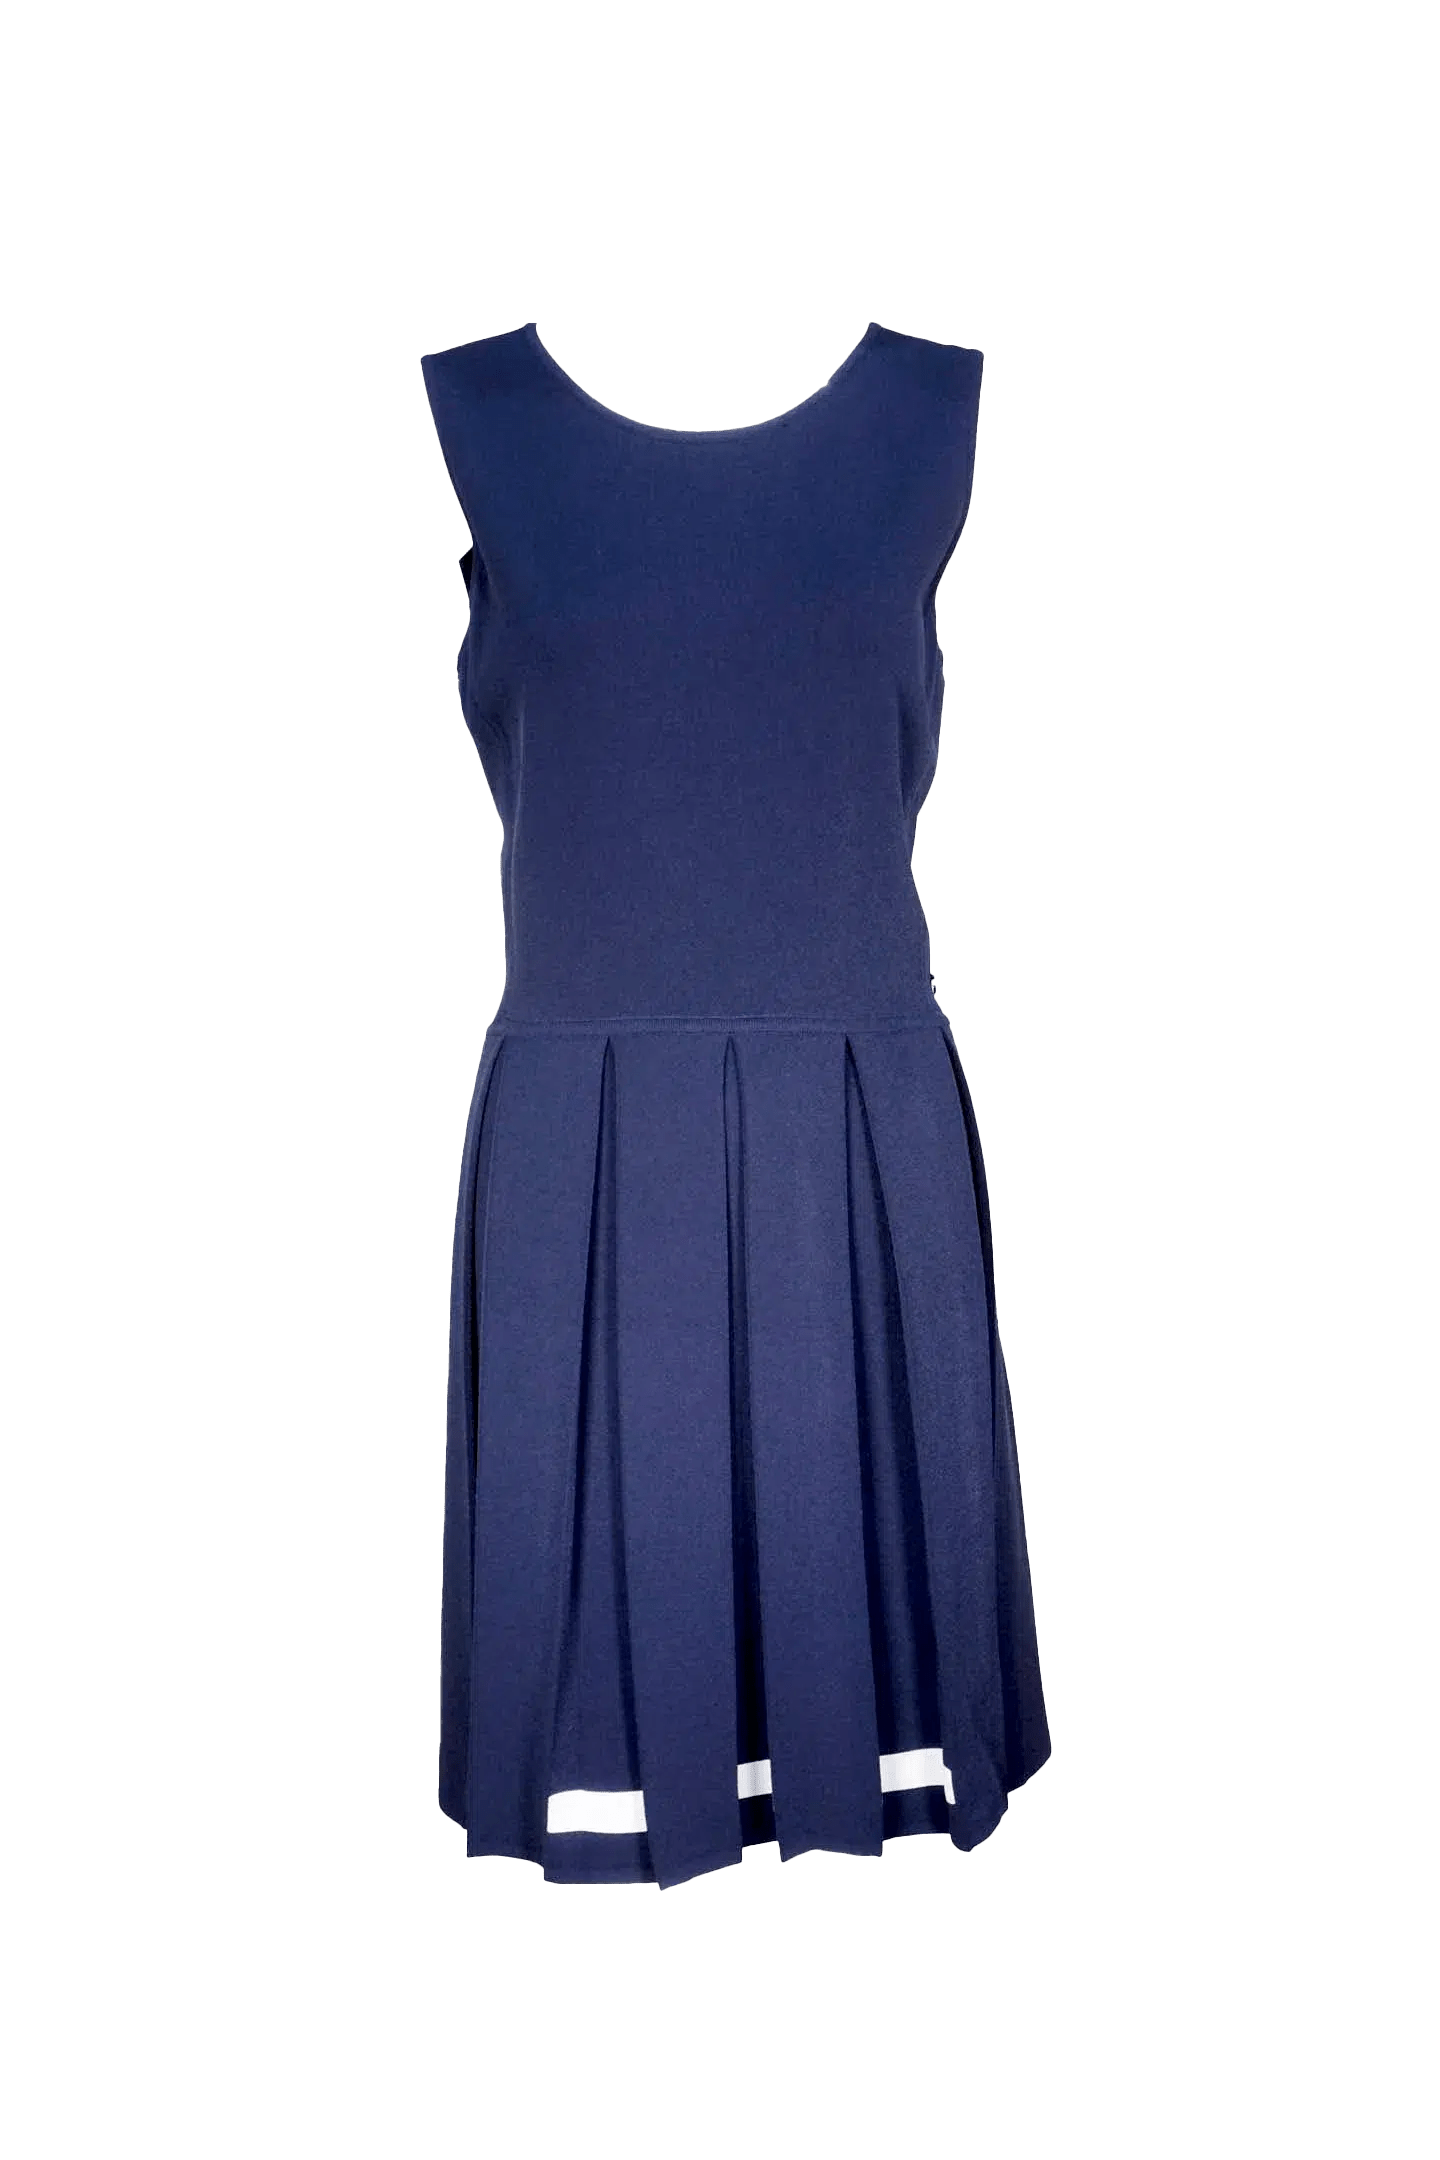 Chanel Size 40 Sleeveless Navy Dress - Foxy Couture Carmel